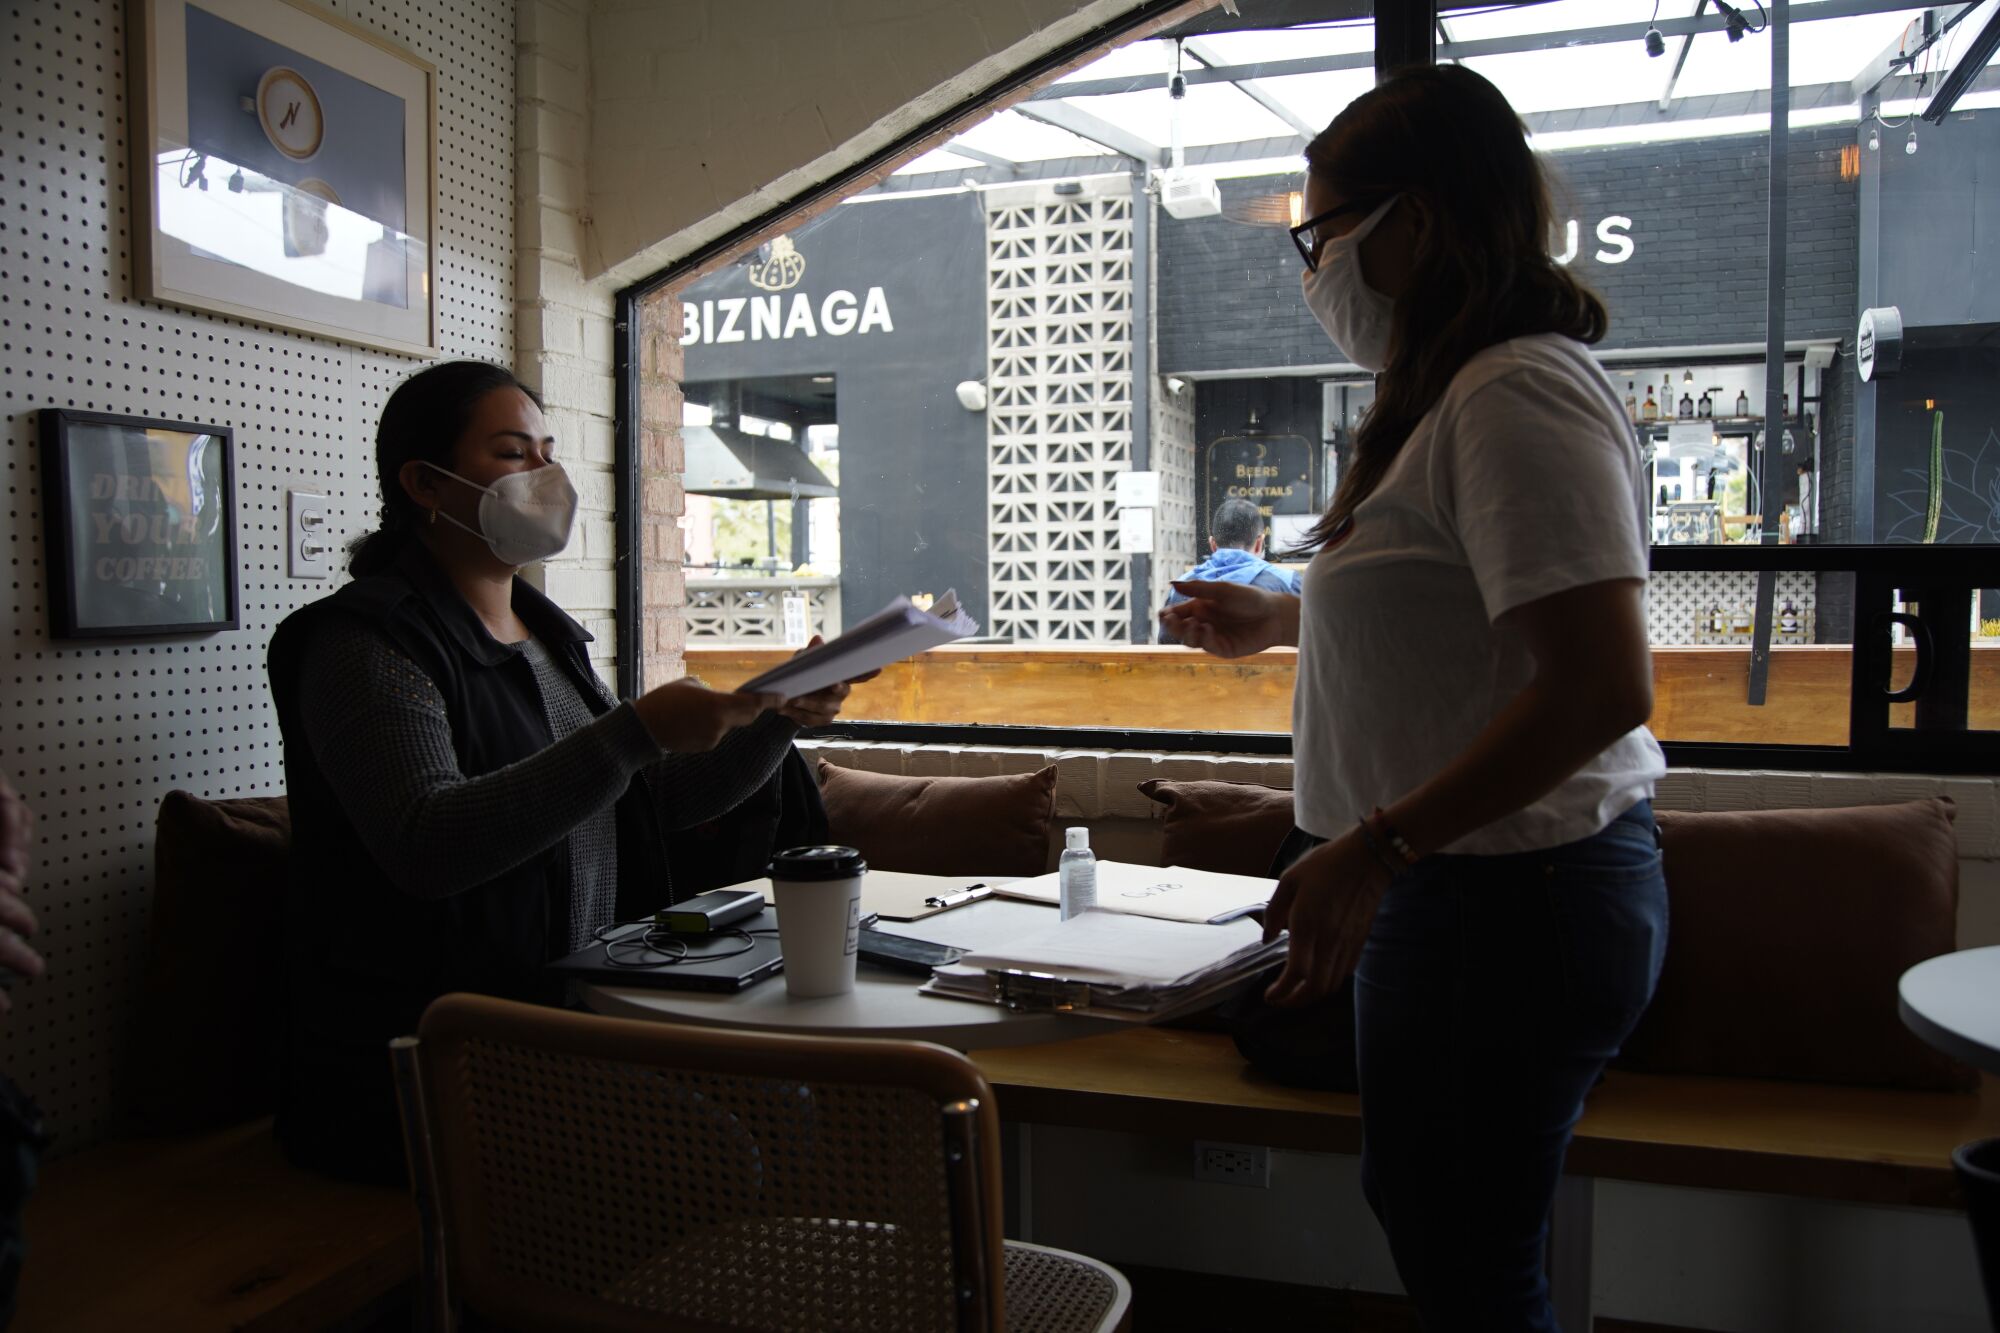 Dulce Garcia receives legal documents at a coffee shop near the Tijuana-San Diego border